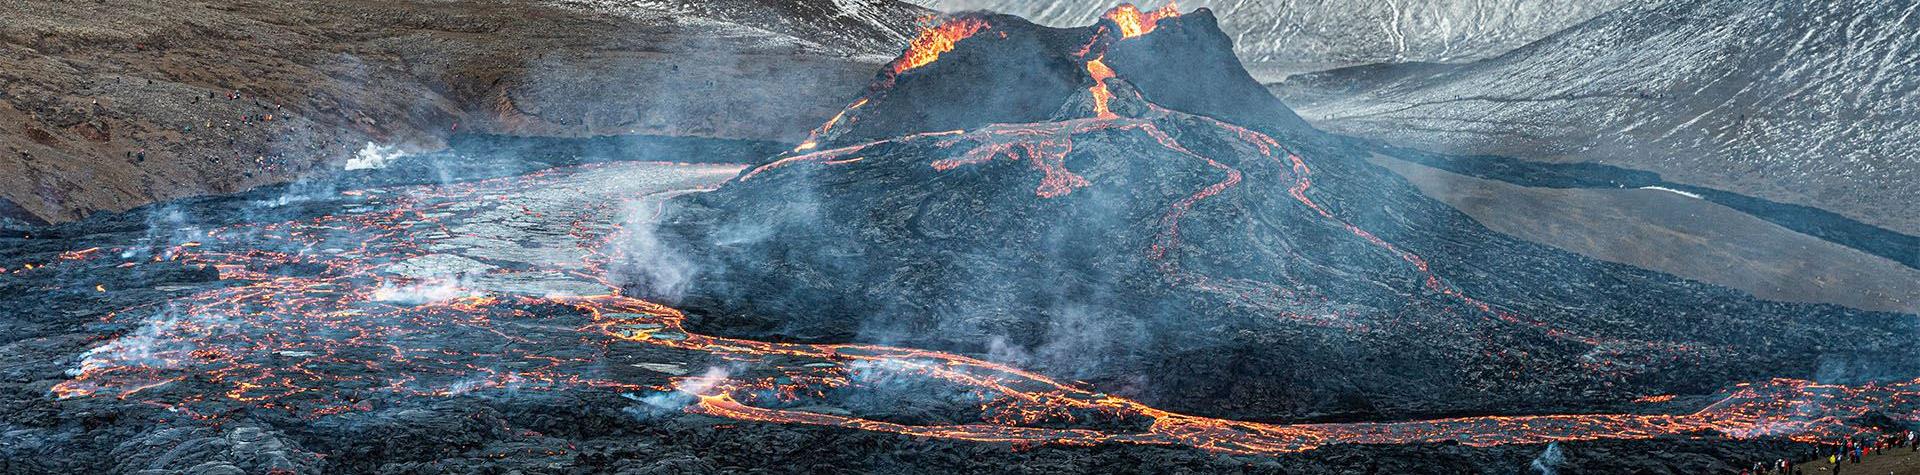 Volcanic Wonders of Reykjanes Geopark